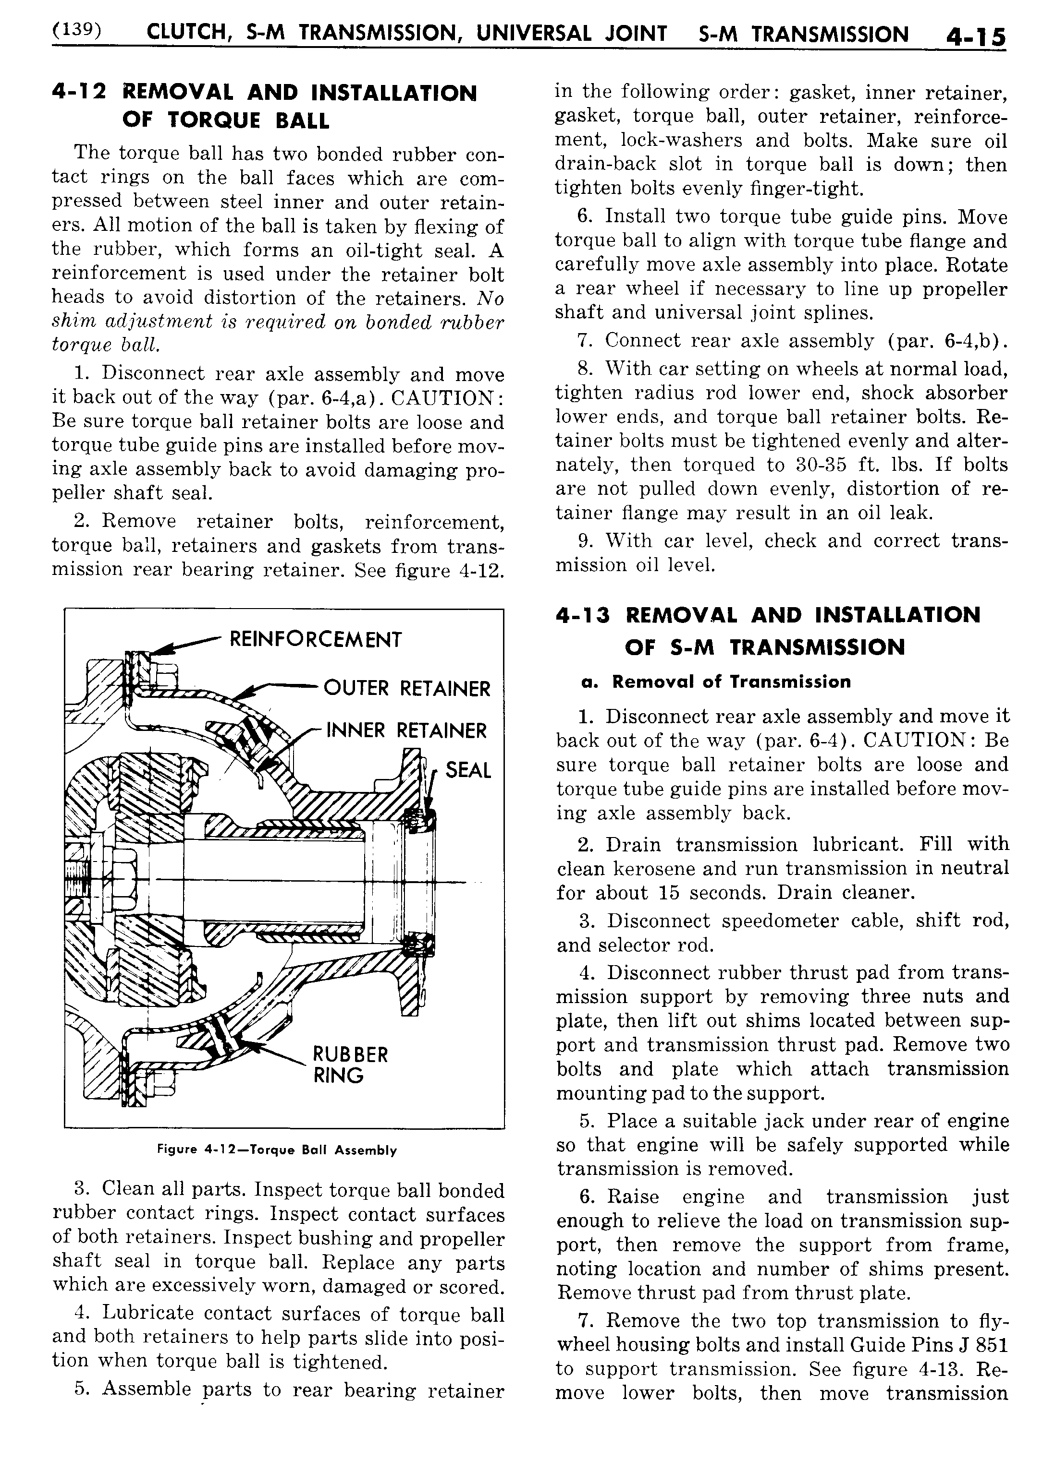 n_05 1956 Buick Shop Manual - Clutch & Trans-015-015.jpg